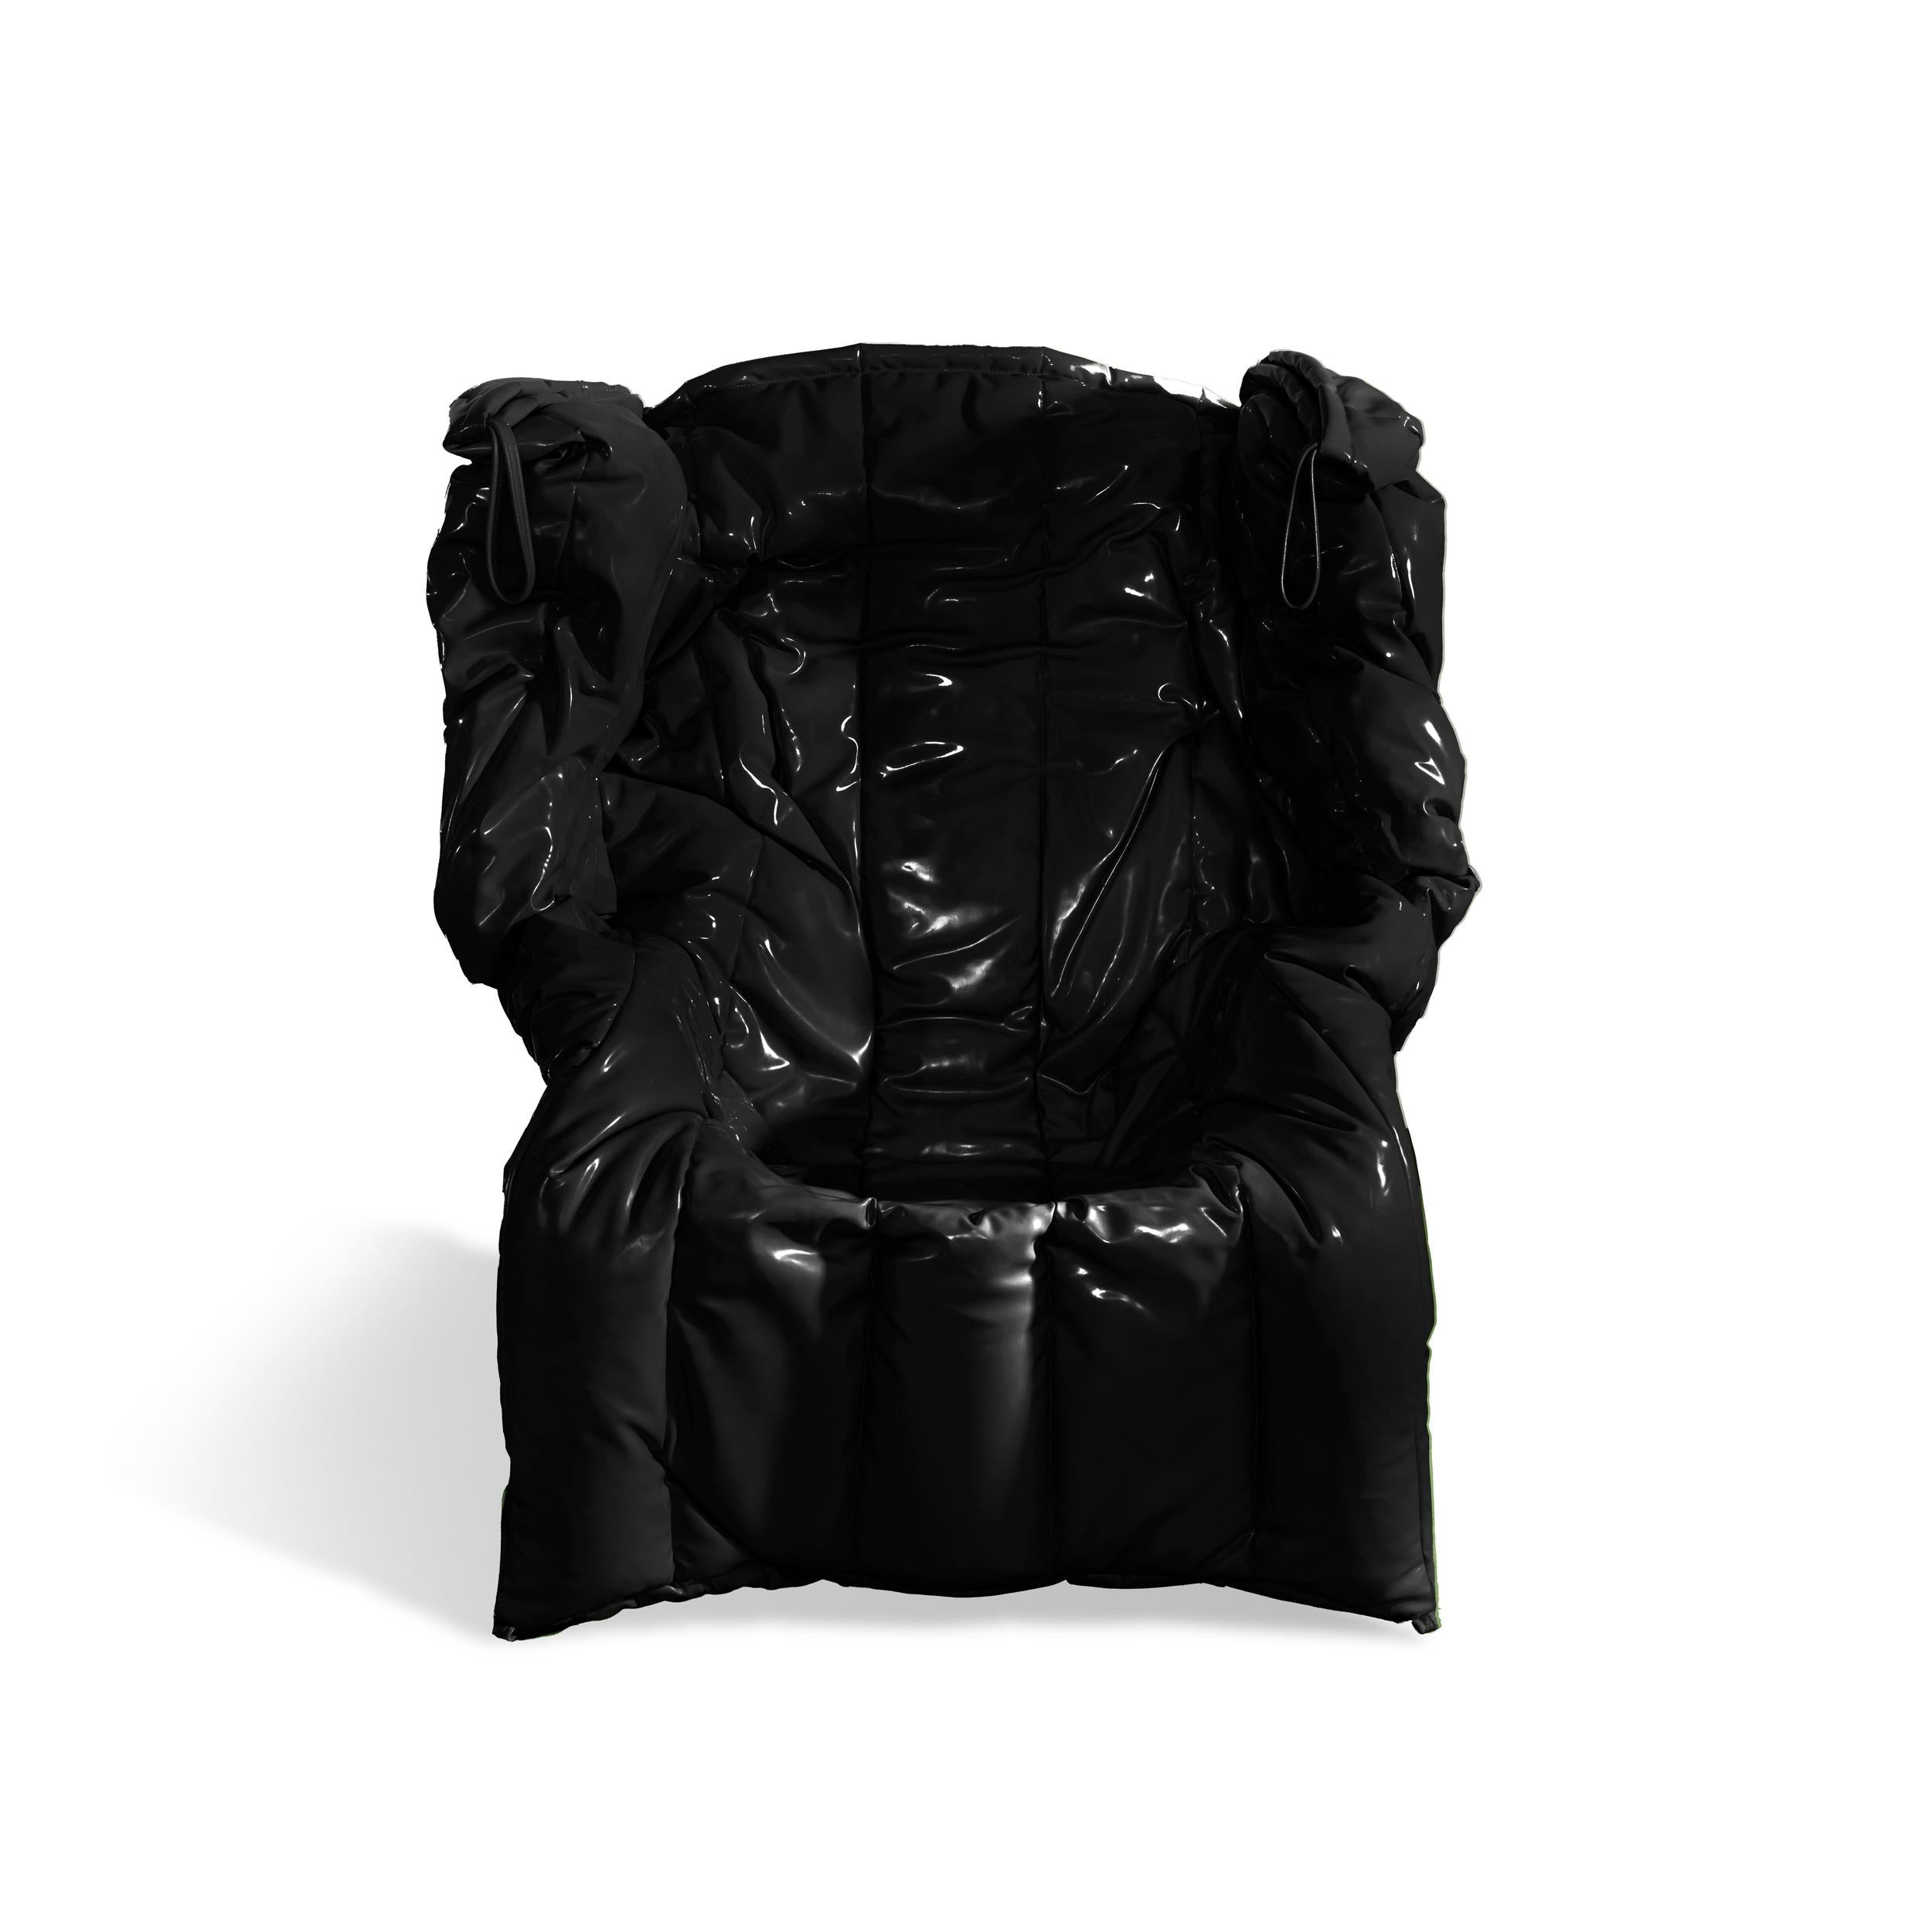 Italian Shadow Armchair by Gaetano Pesce - Black For Sale